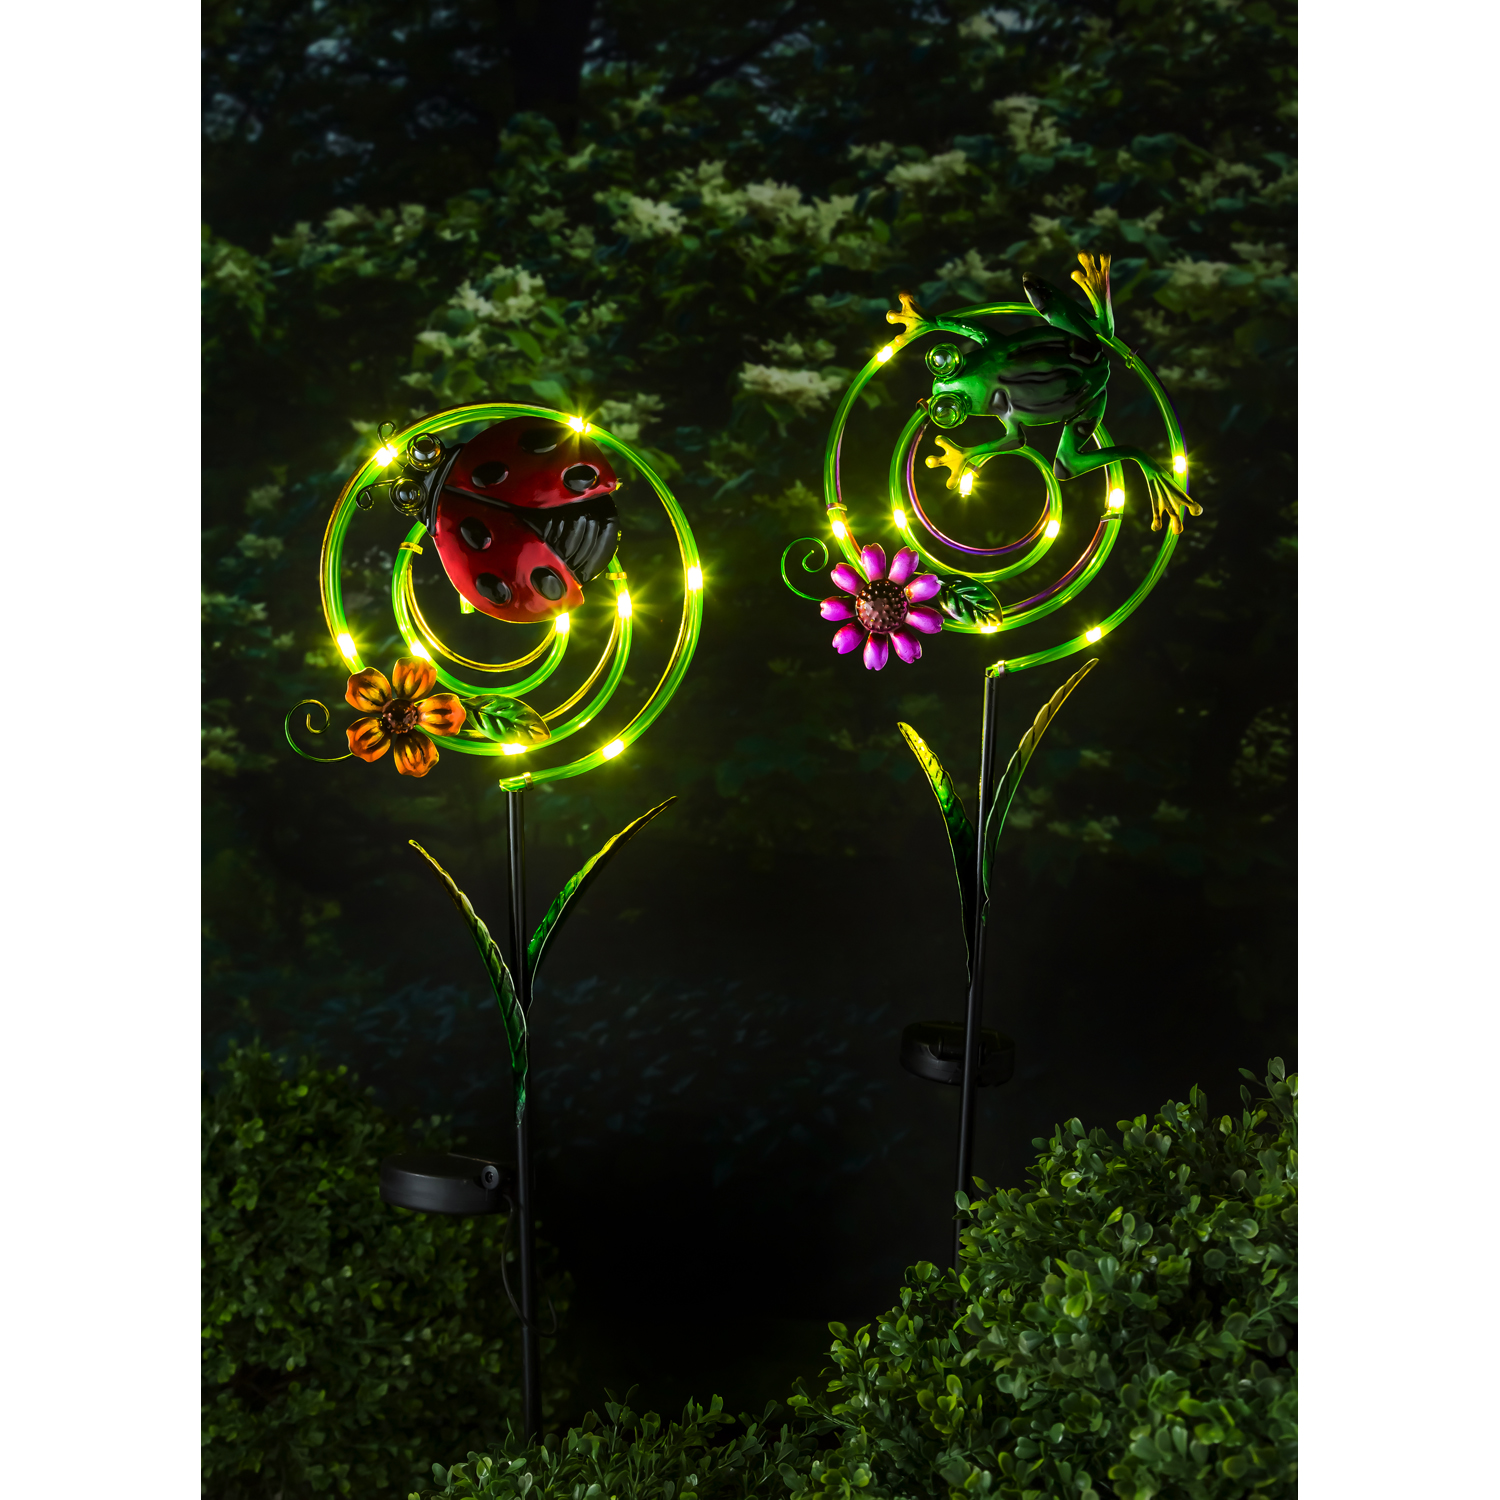 Evergreen 35.75"H Chasing Light Solar Swirl Garden Stake, 2 ASST., Frog/Ladybug, 1.8''x 8.5'' x 35.8'' inches - image 2 of 3